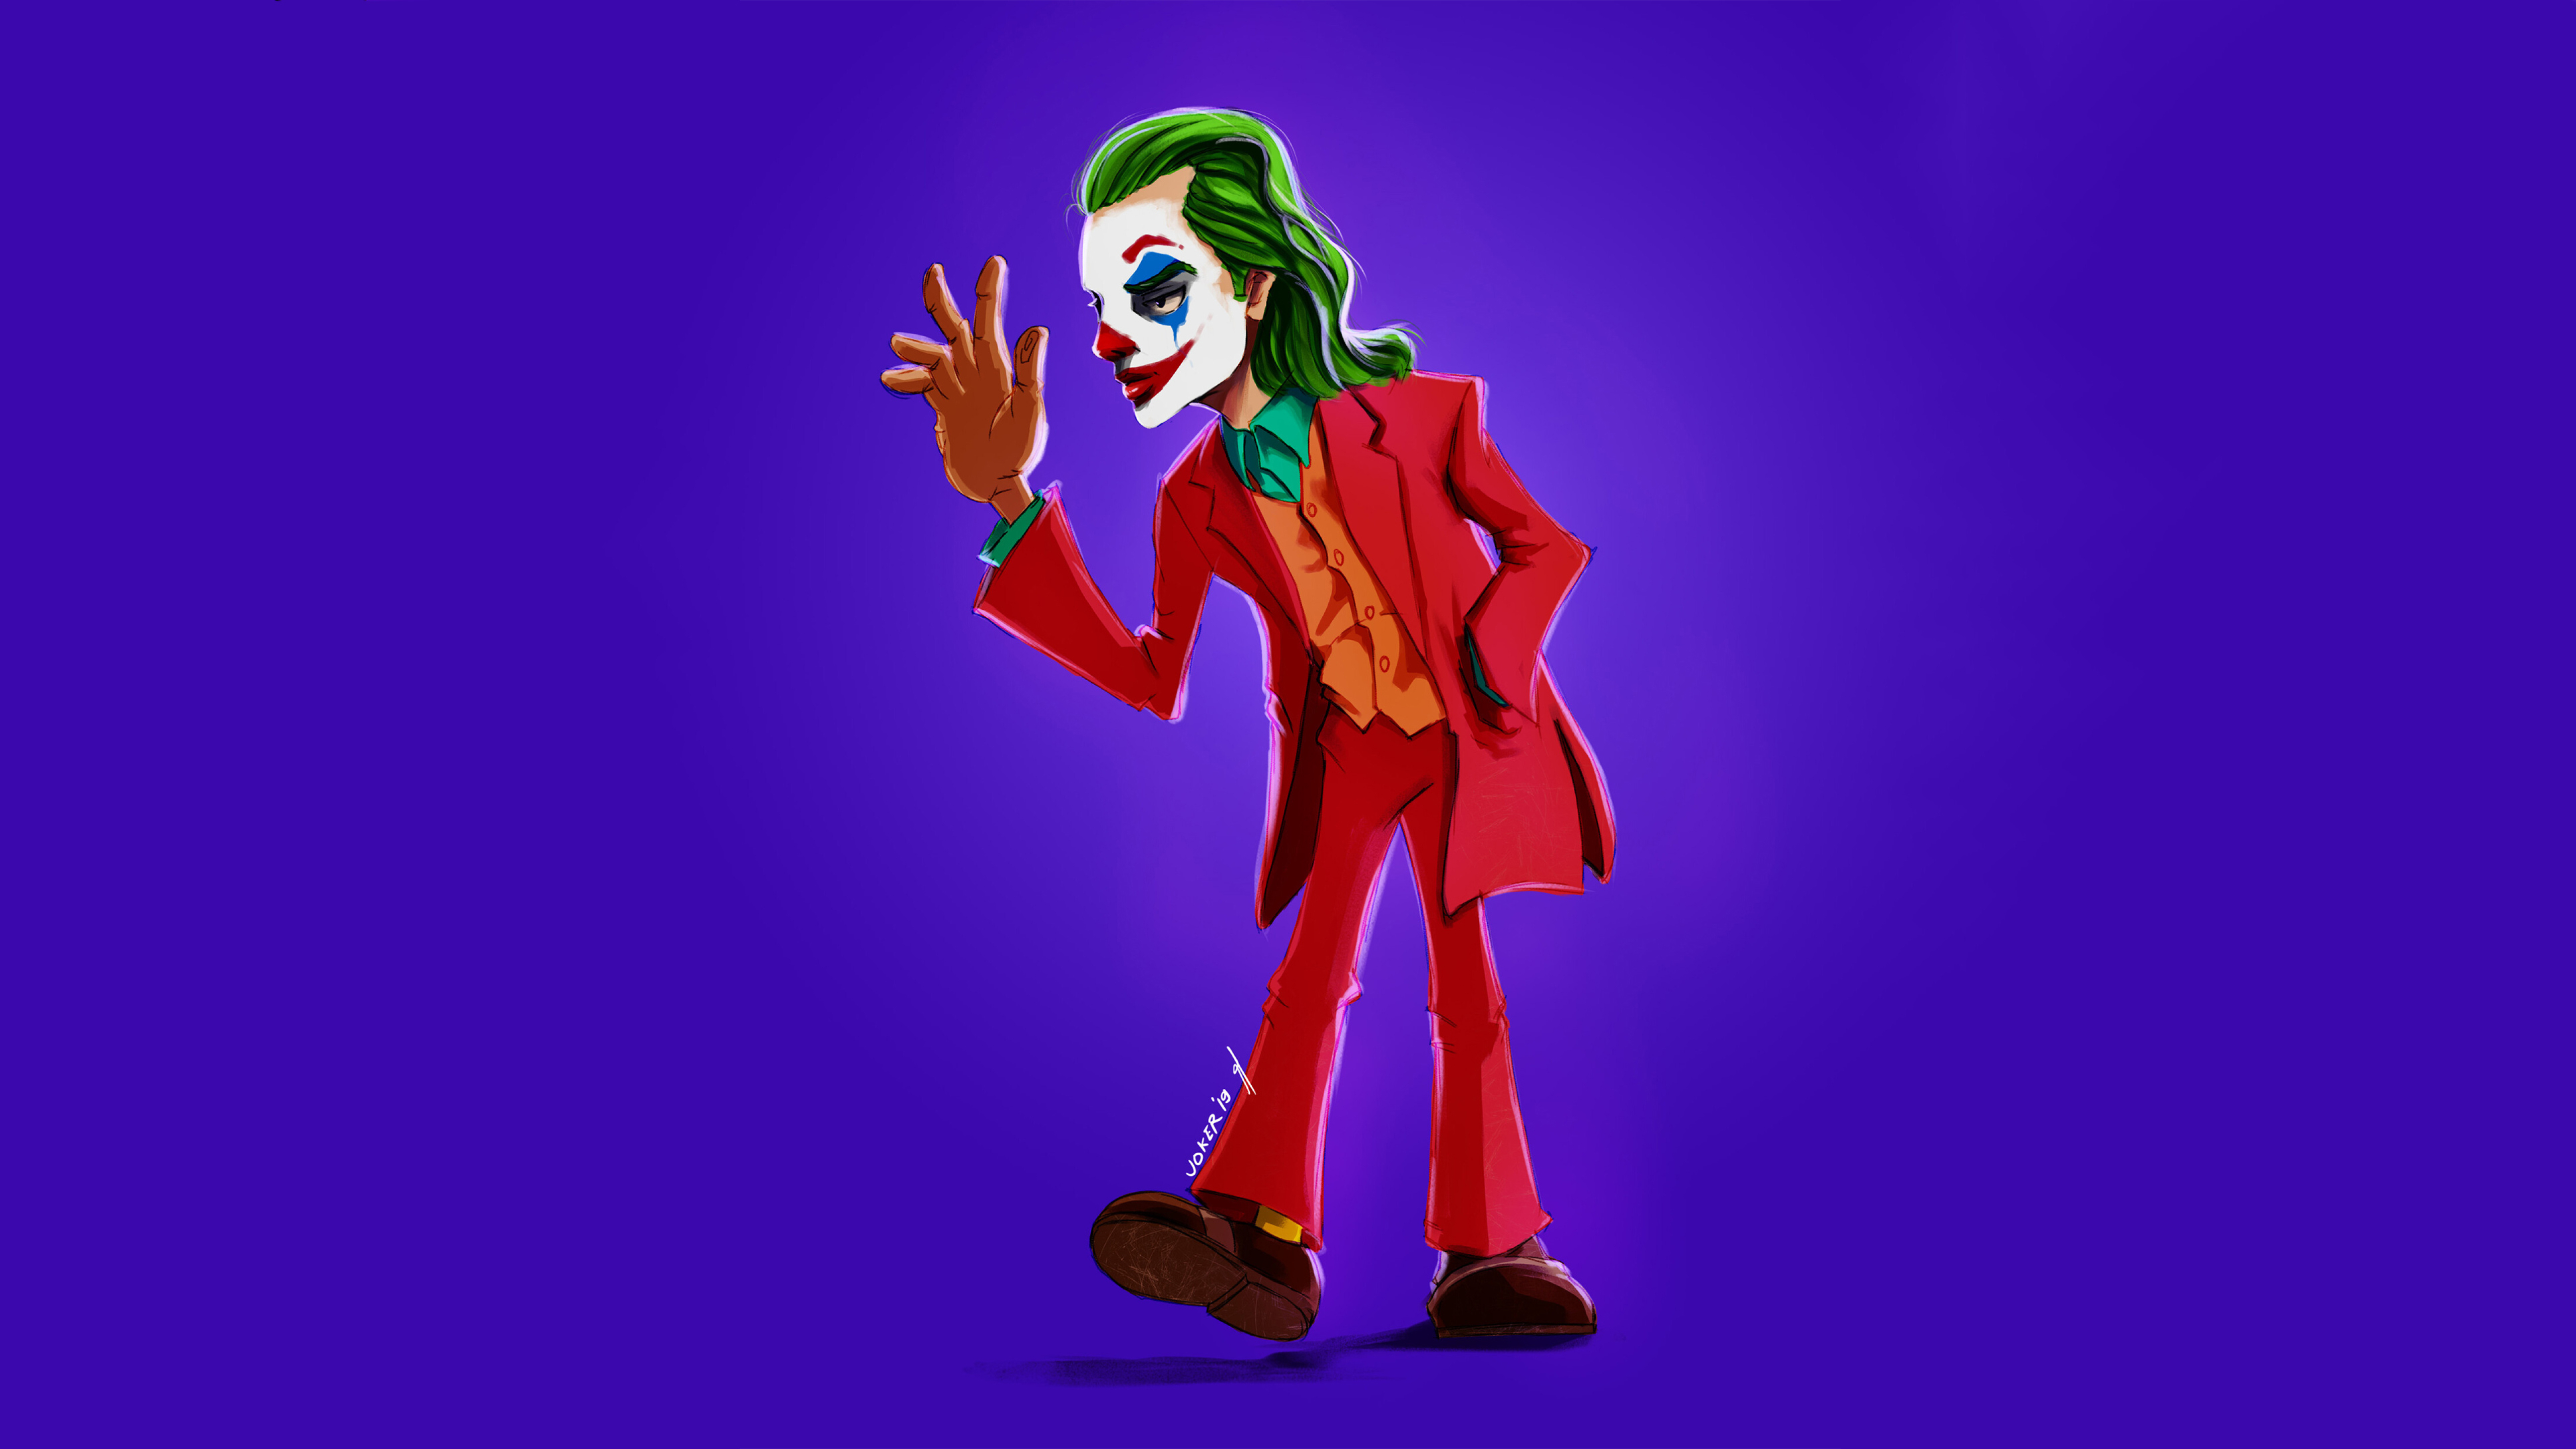 5120x2880 New 4K Joker 5K Wallpaper, HD Superheroes 4K Wallpapers, Images,  Photos and Background - Wallpapers Den